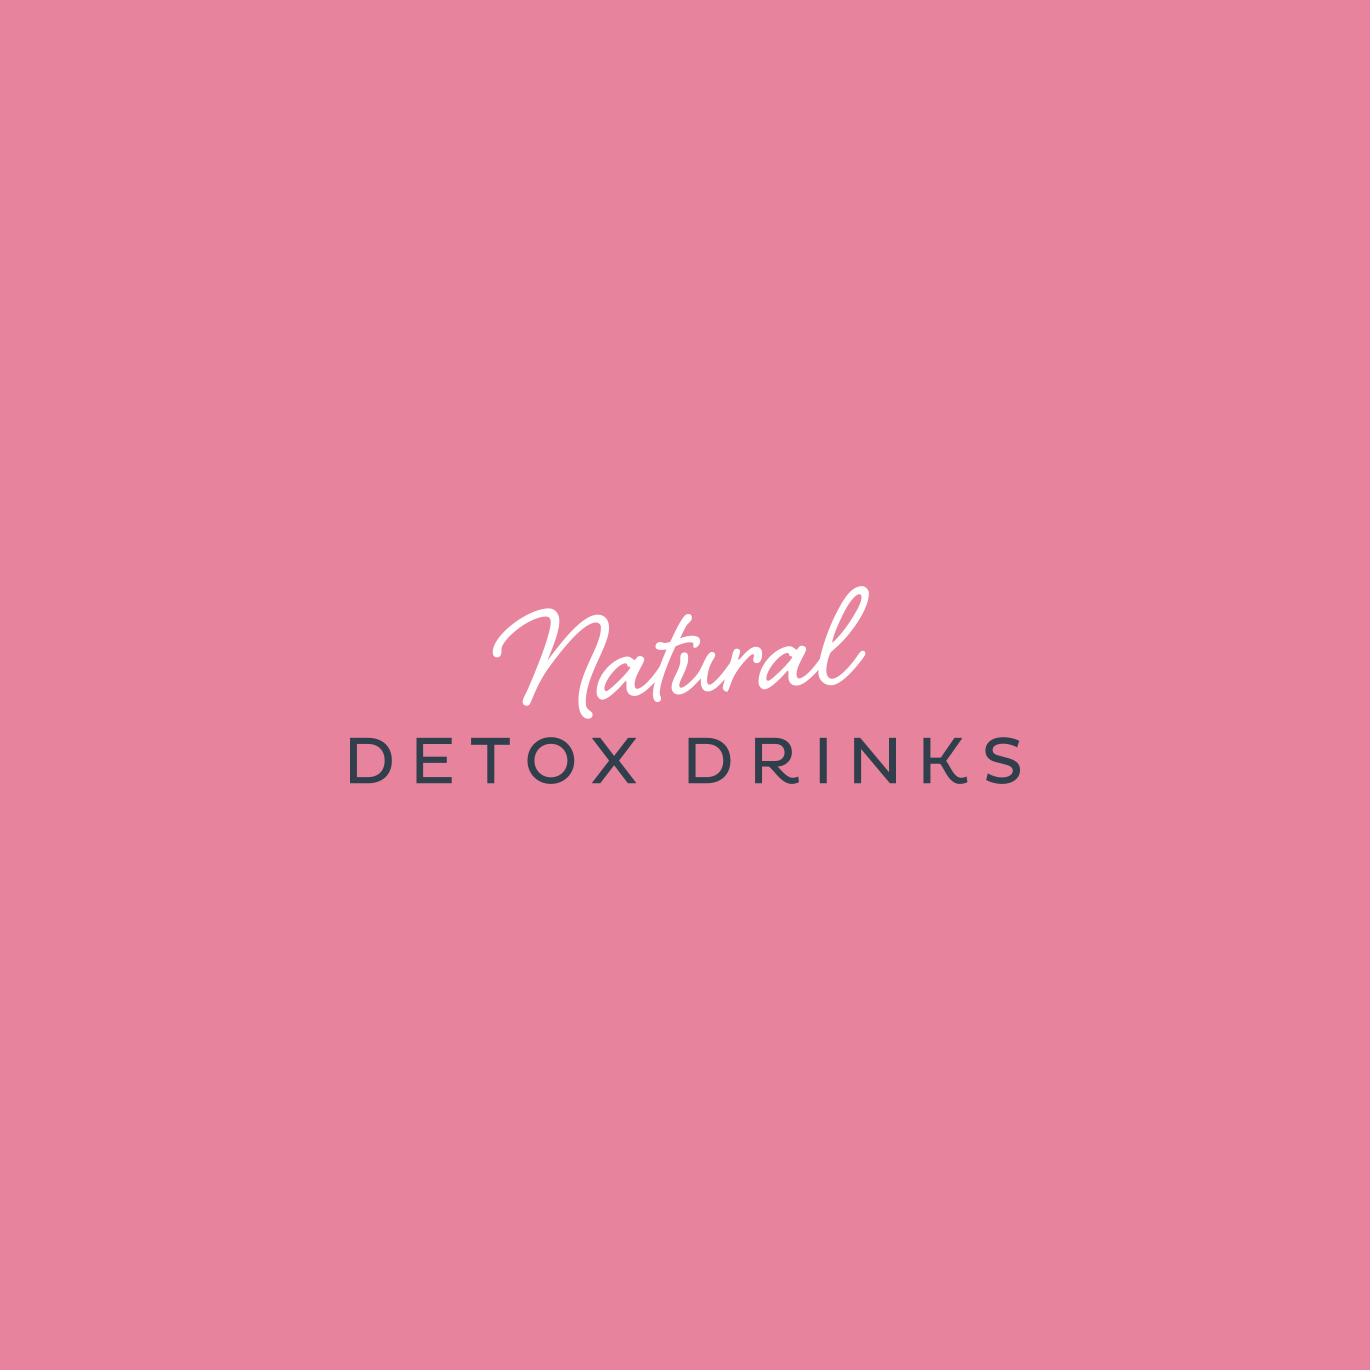 Natural Detox Drinks Logo